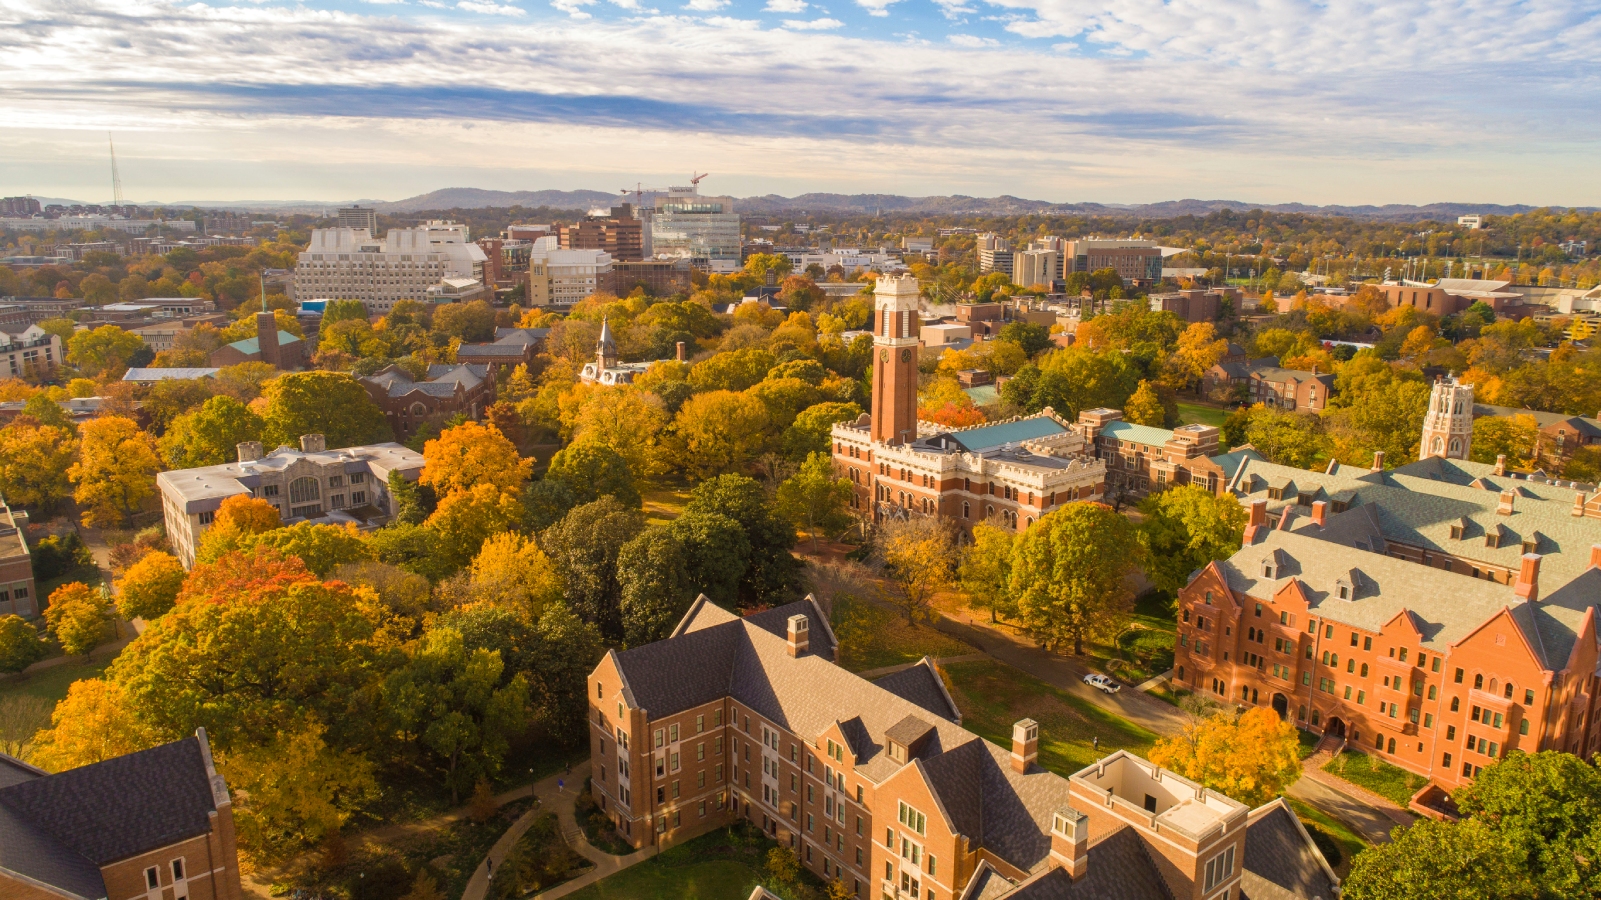 Vanderbilt aerial view